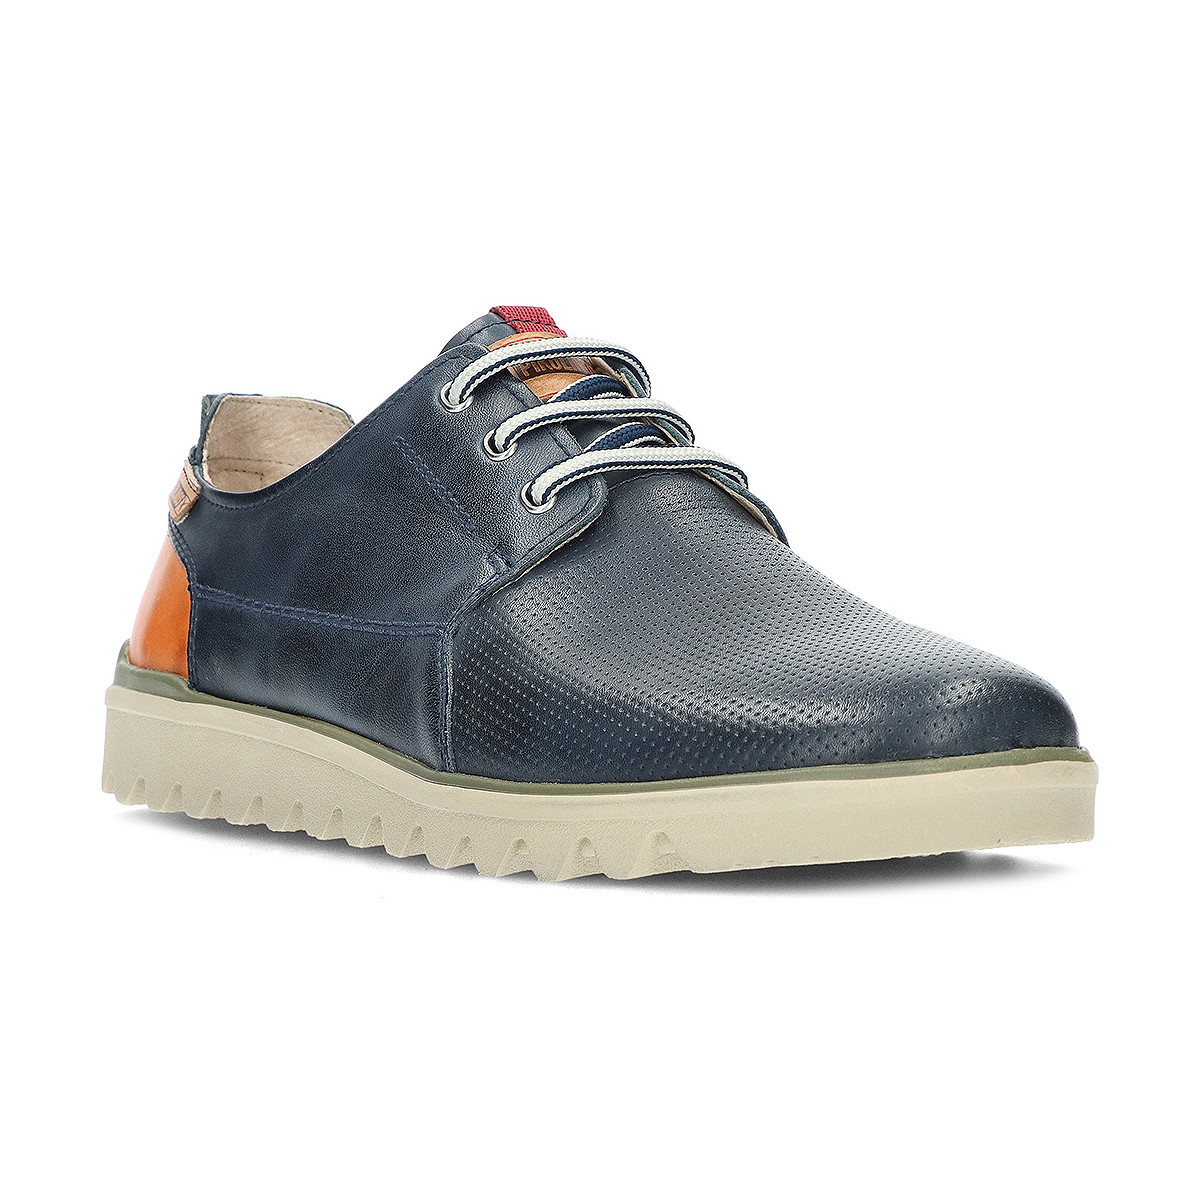 Schuhe Herren Derby-Schuhe & Richelieu Pikolinos SCHUHE TABERNAS M5V-4175 Blau